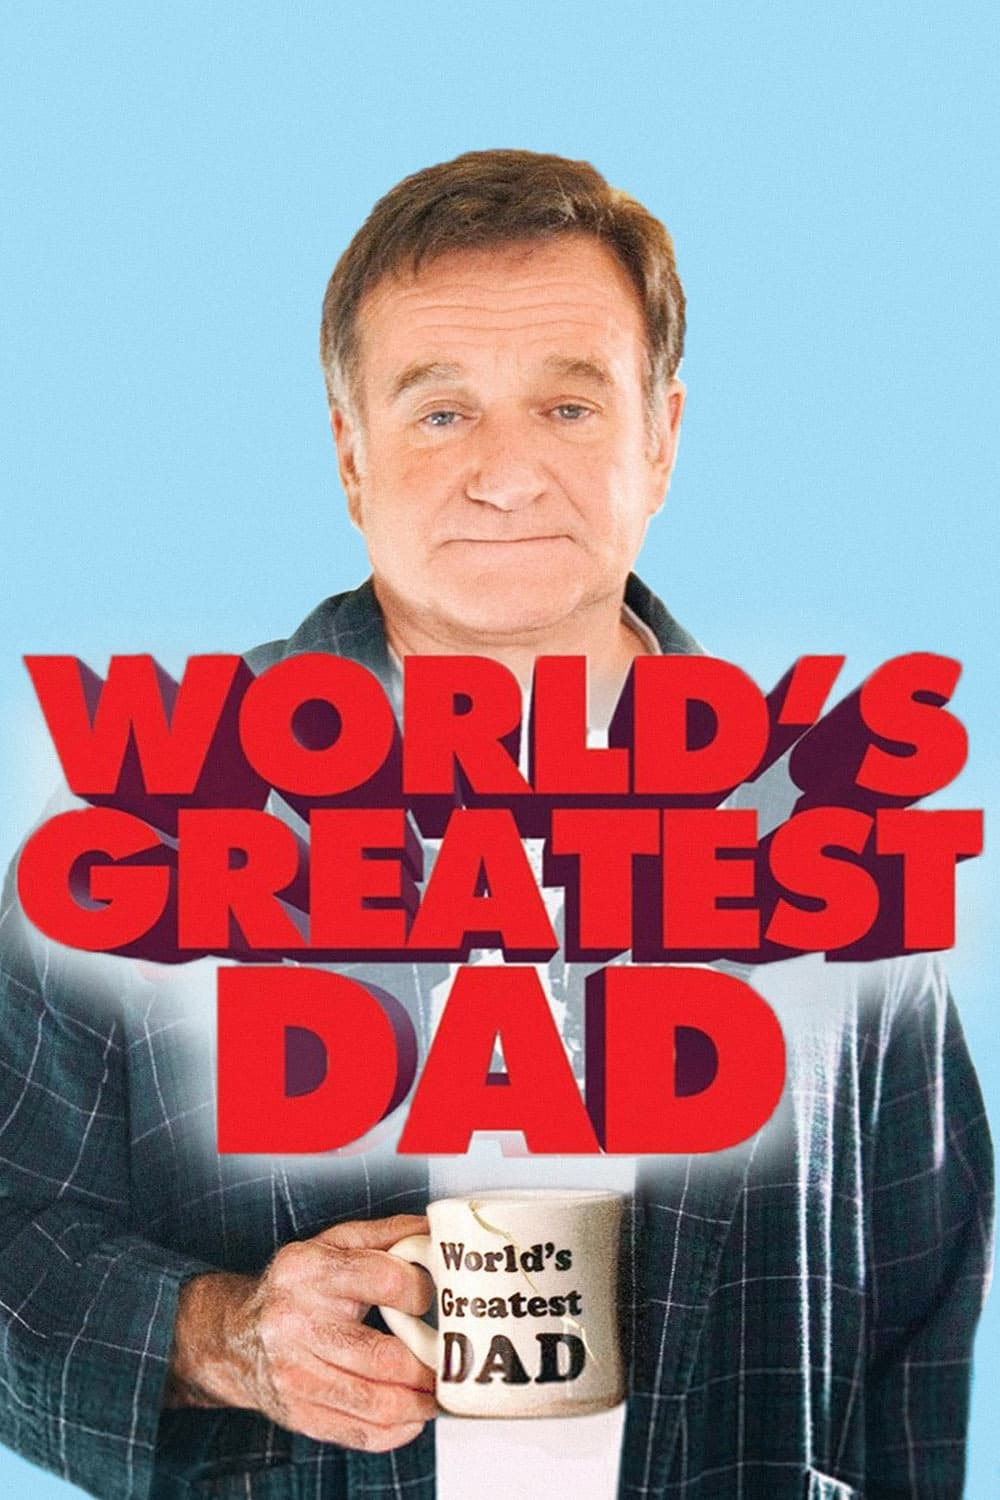 World's Greatest Dad (2009)